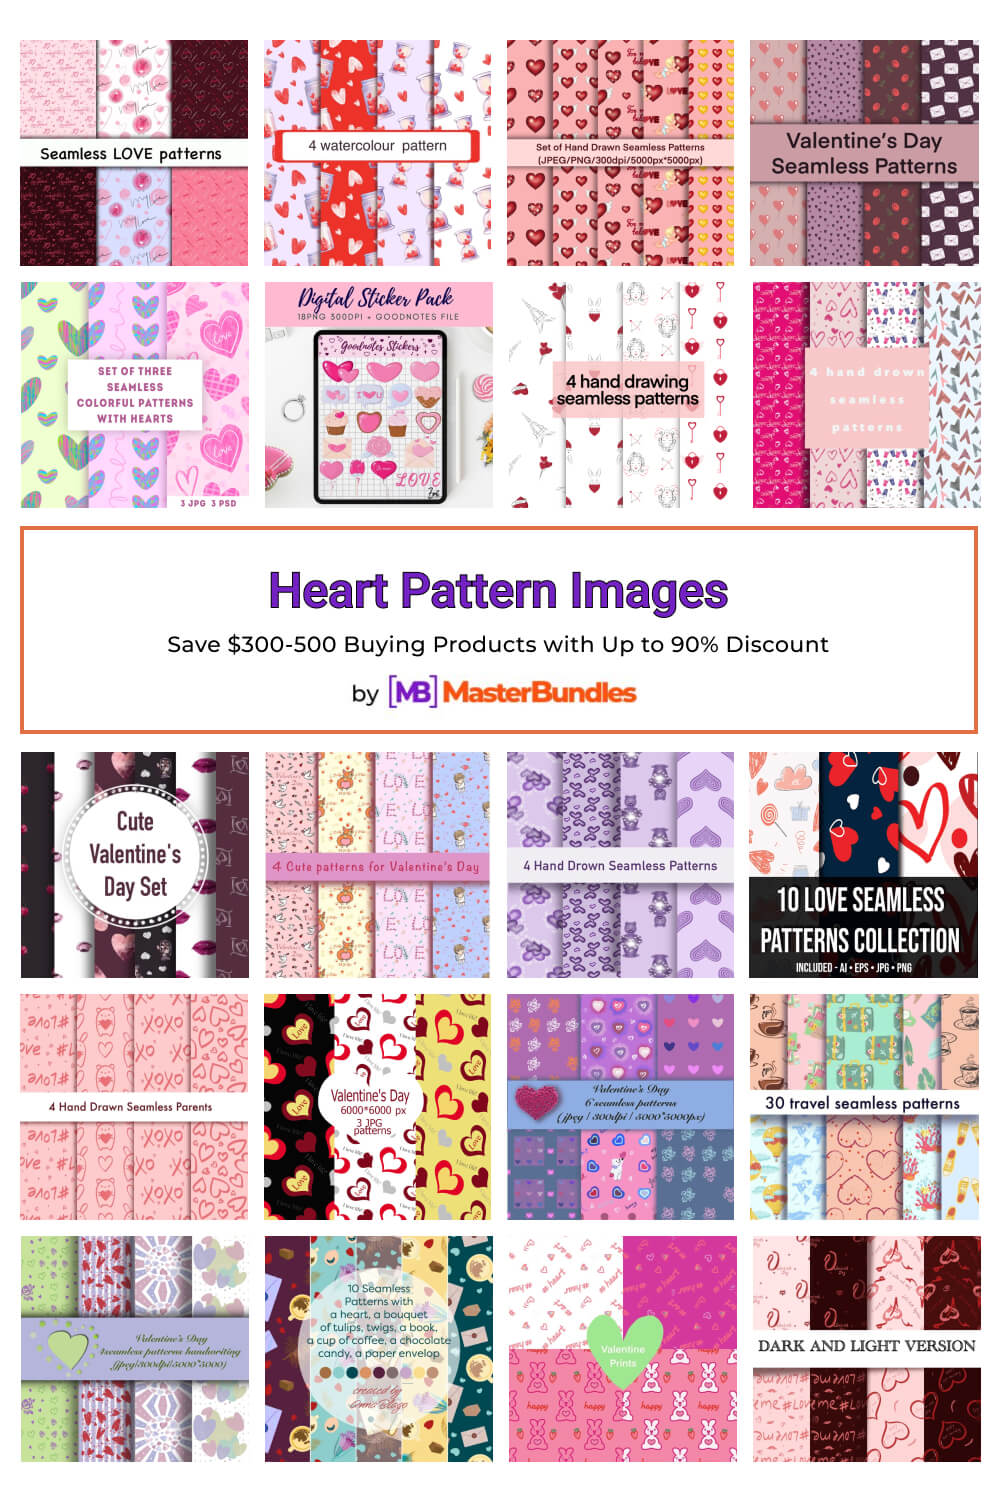 heart pattern images pinterest image.